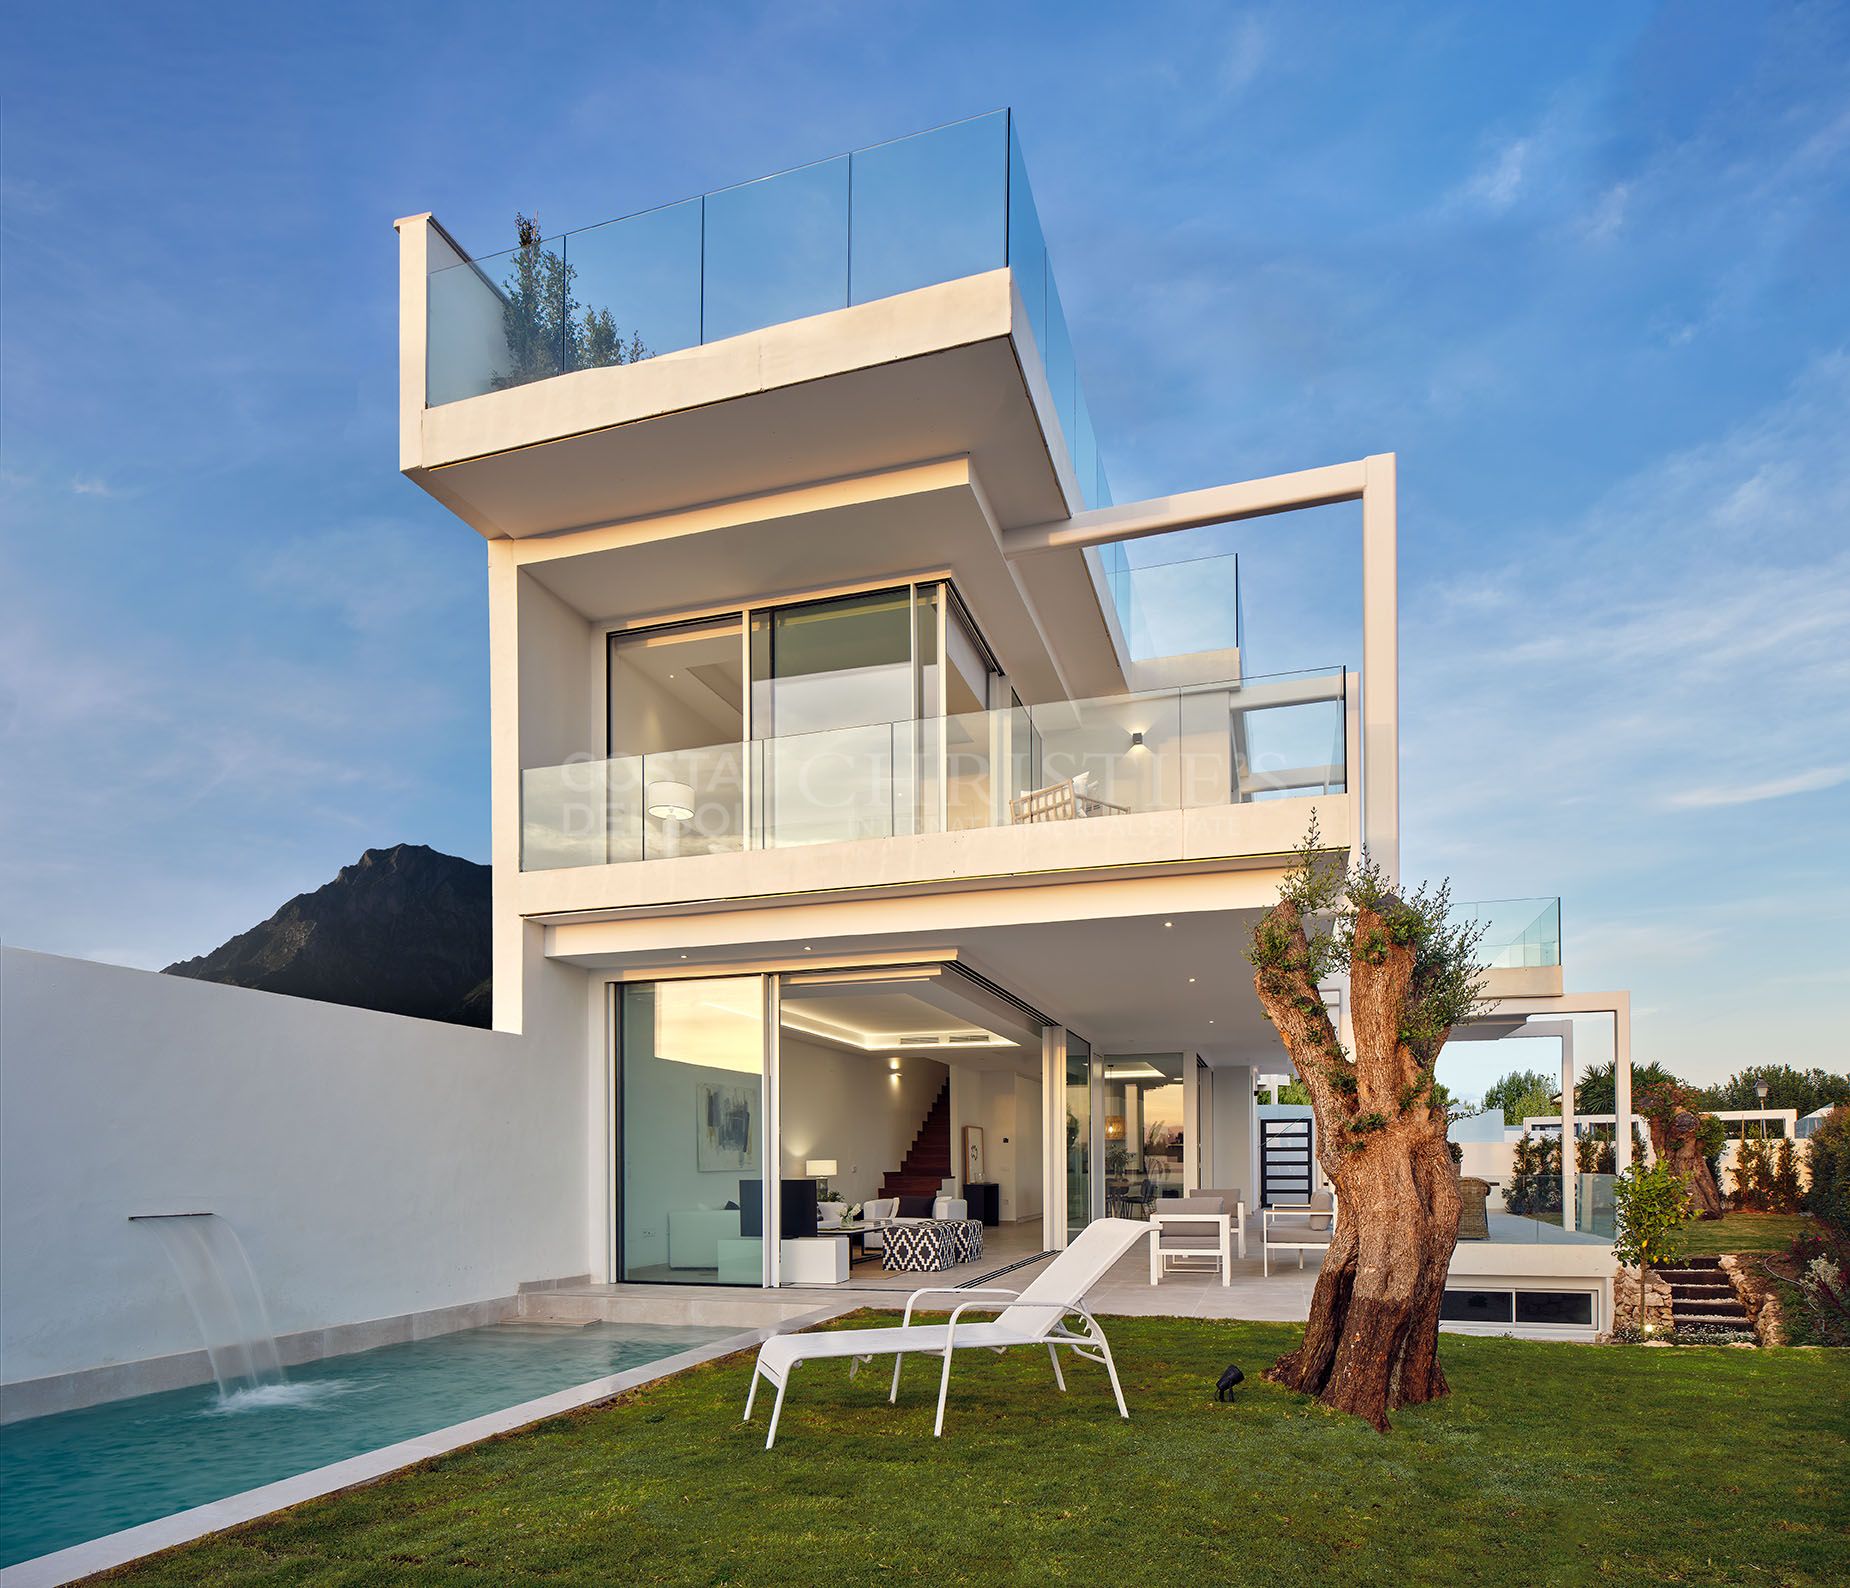 Jazmines 14, Monte Paraiso Country Club, Marbella Gouden Mijl - Nieuw dynamisch project in de buurt van Monte Paraiso | Christie’s International Real Estate